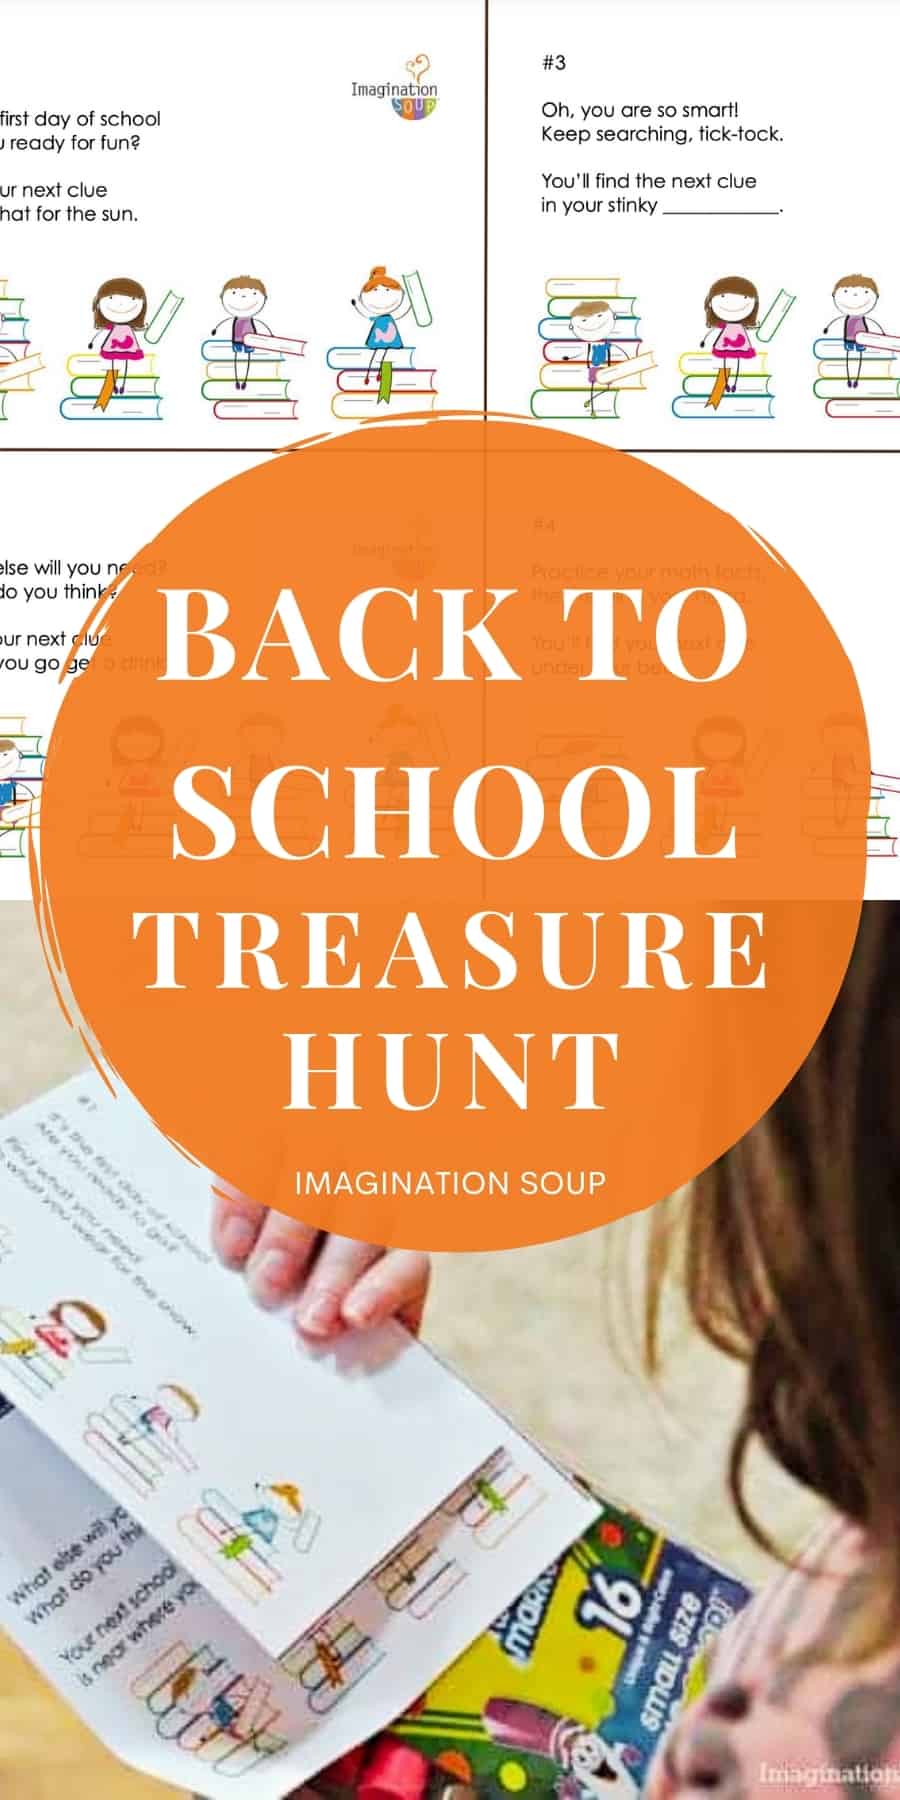 Back to School Treasure Hunt